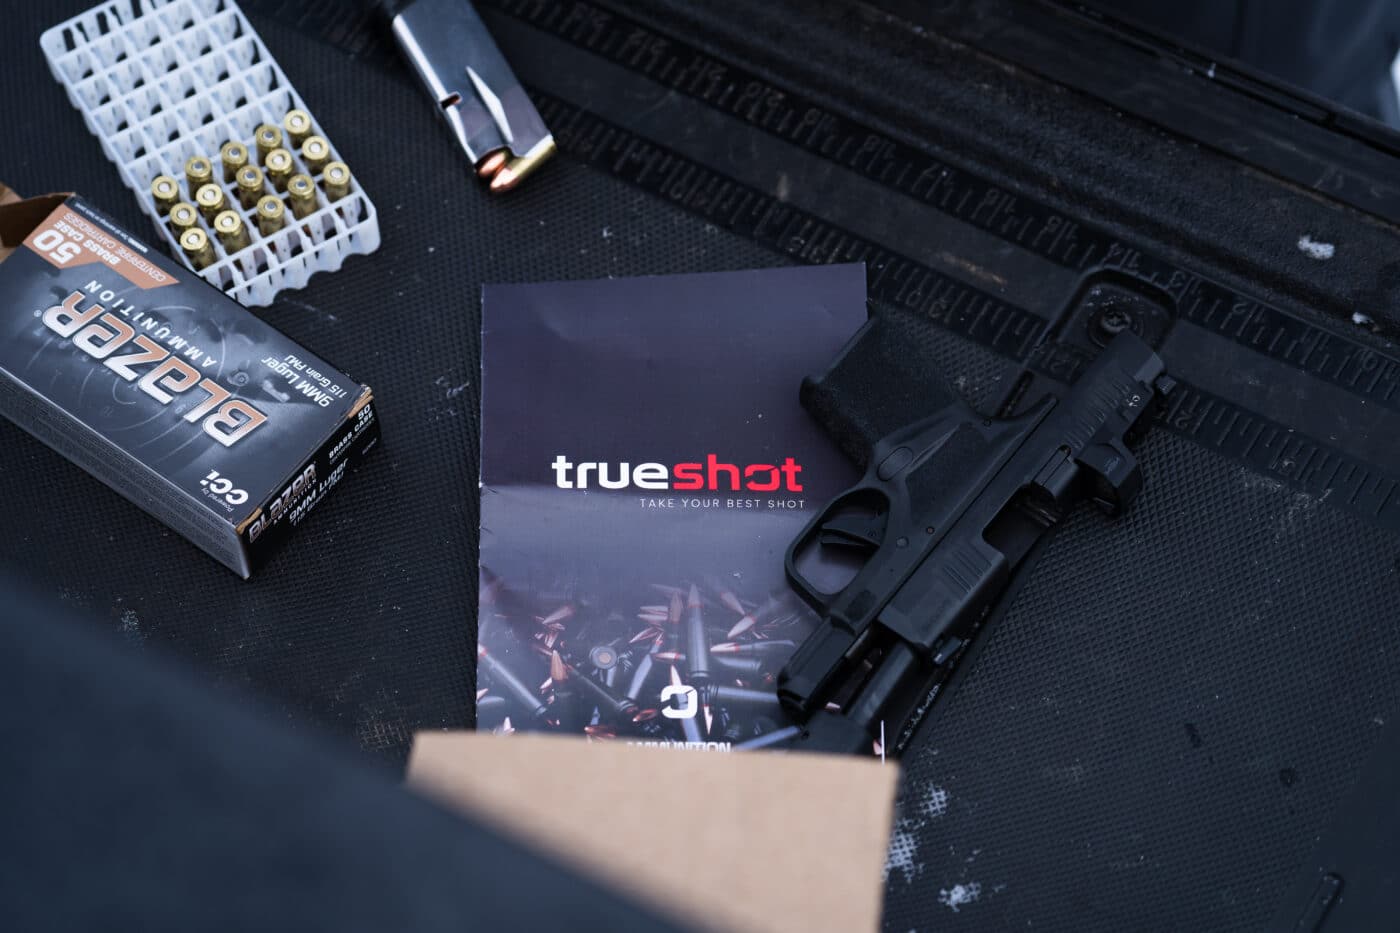 True Shot Gun Club pamphlet next to pistol and ammo